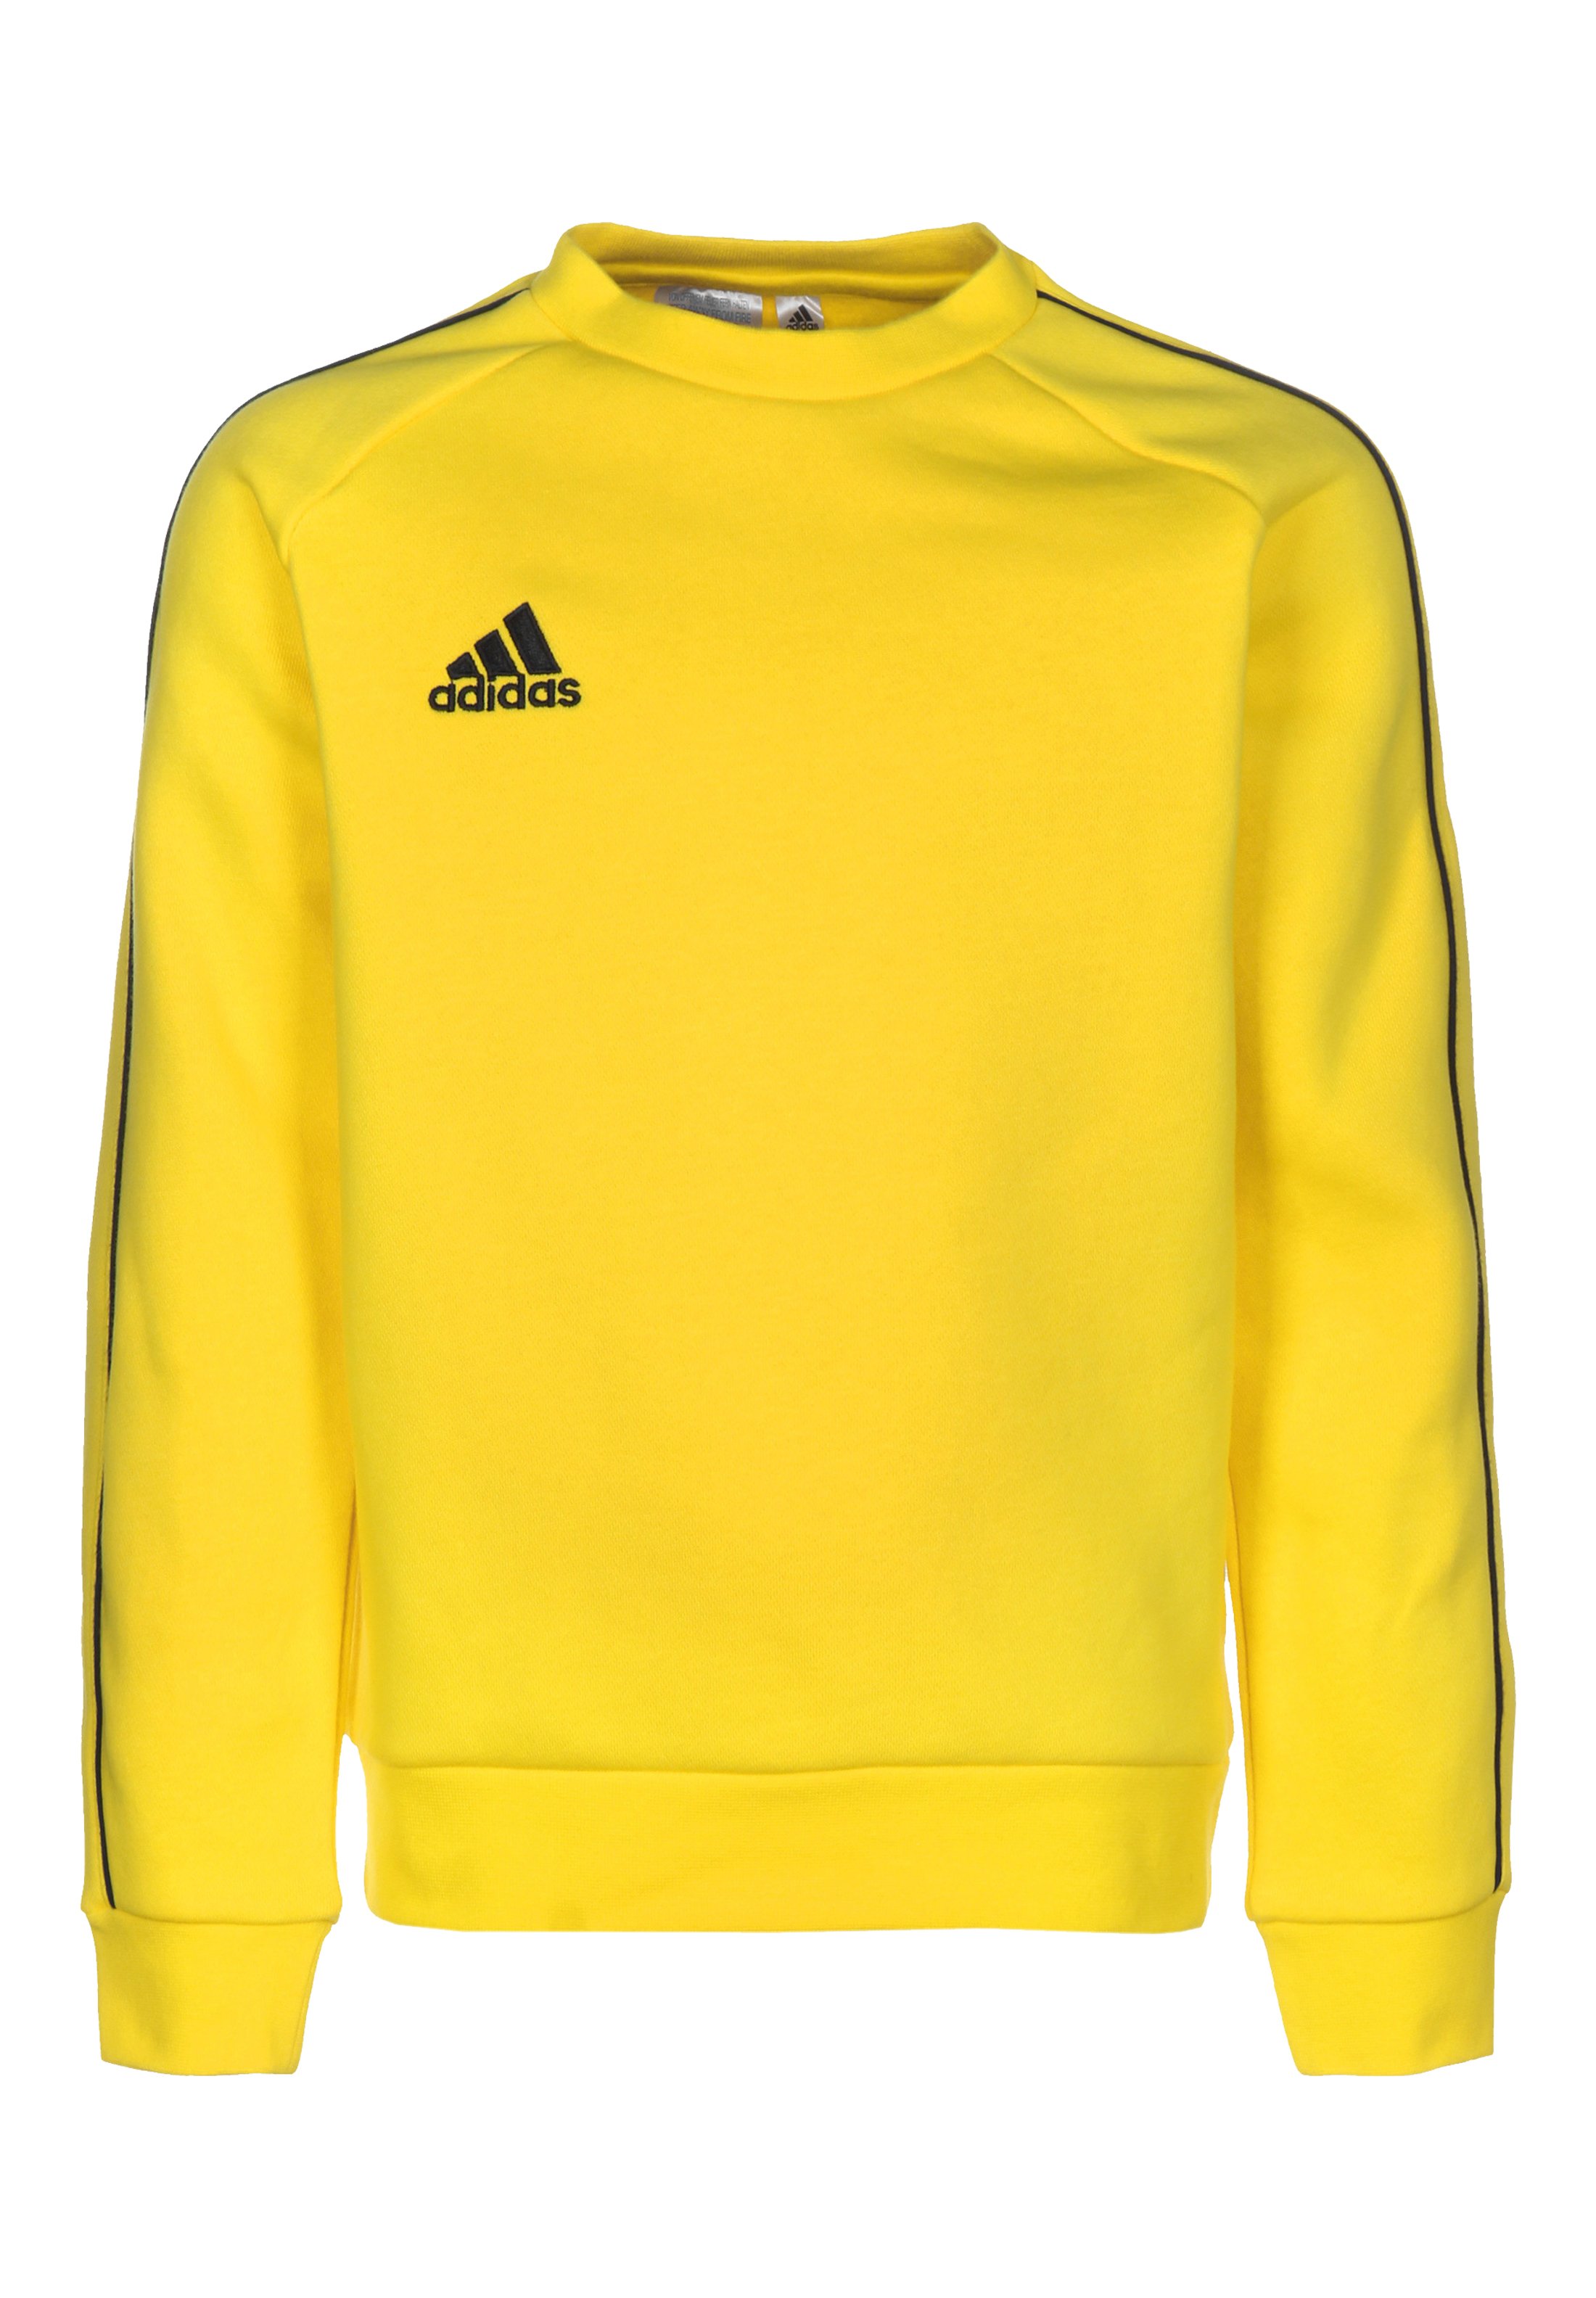 adidas Performance Sweatshirt - yellow/gelb